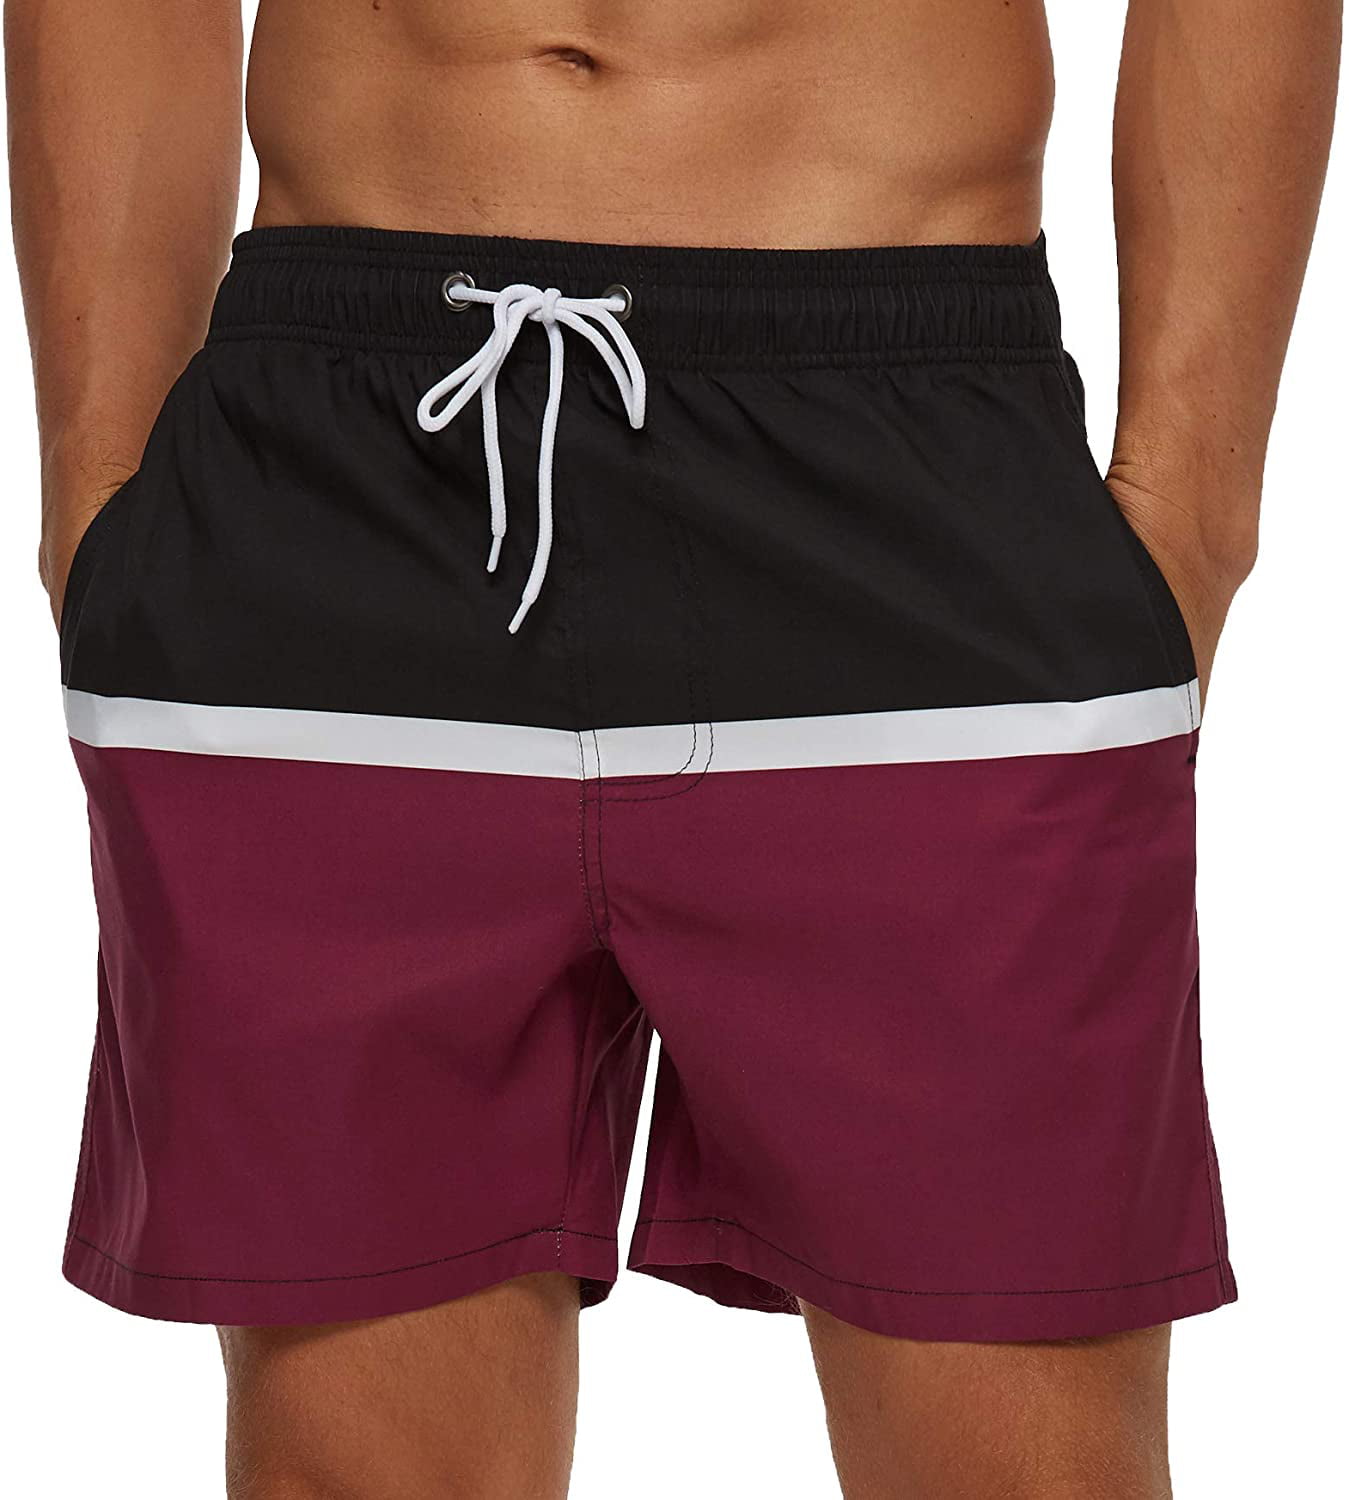 SILKWORLD Men's Swim Trunks Quick Dry Beach Shorts with Pockets 